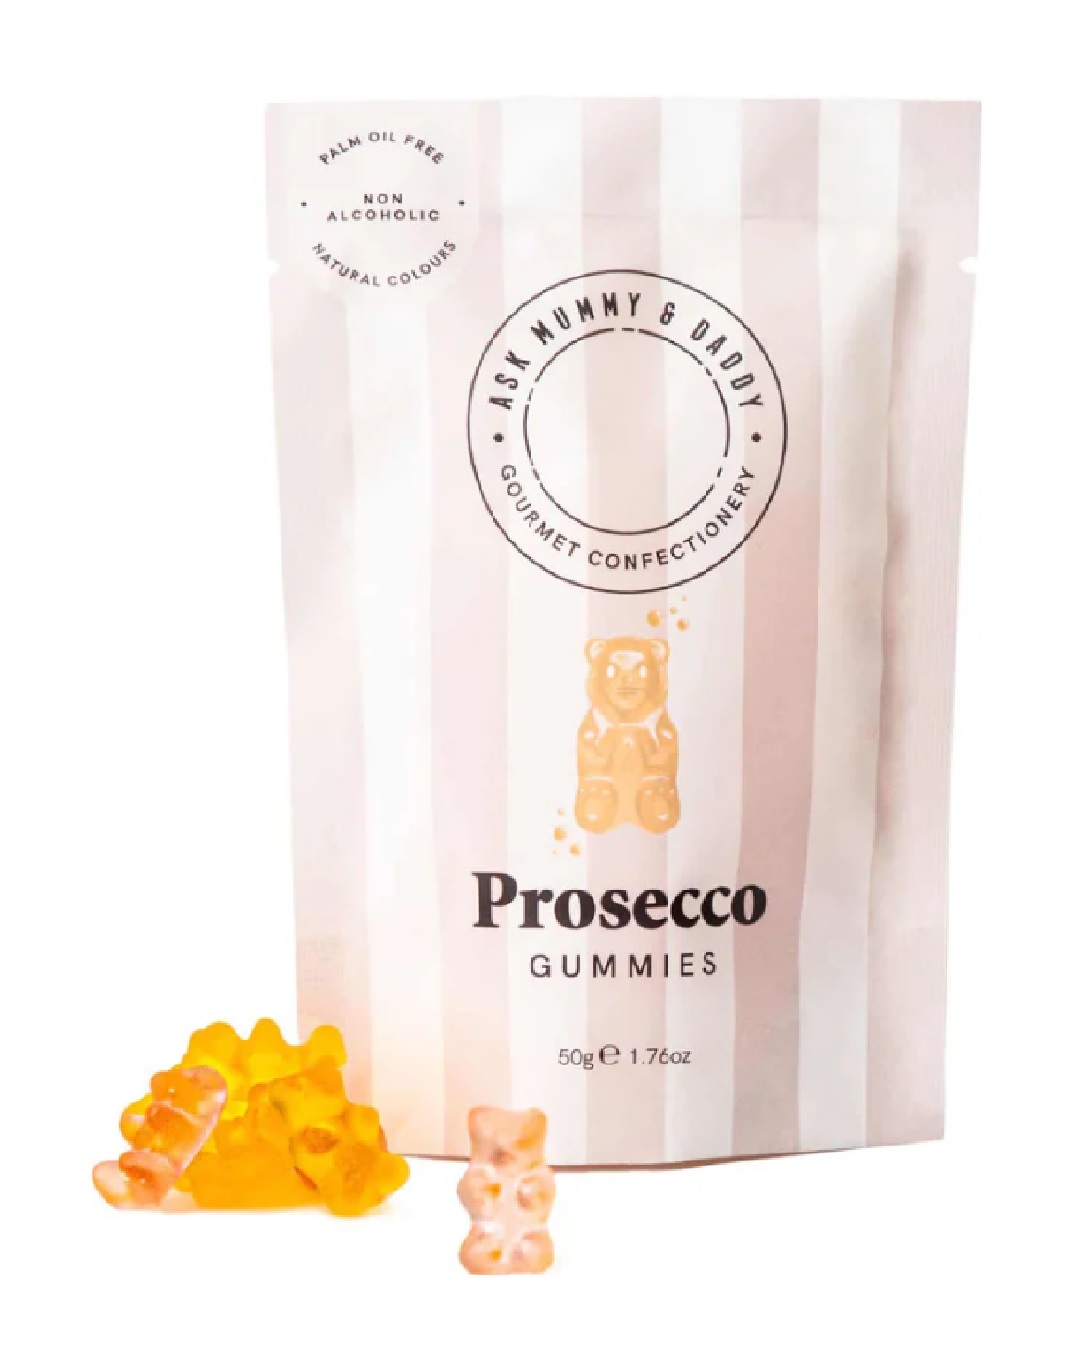 Prosecco gummy bears